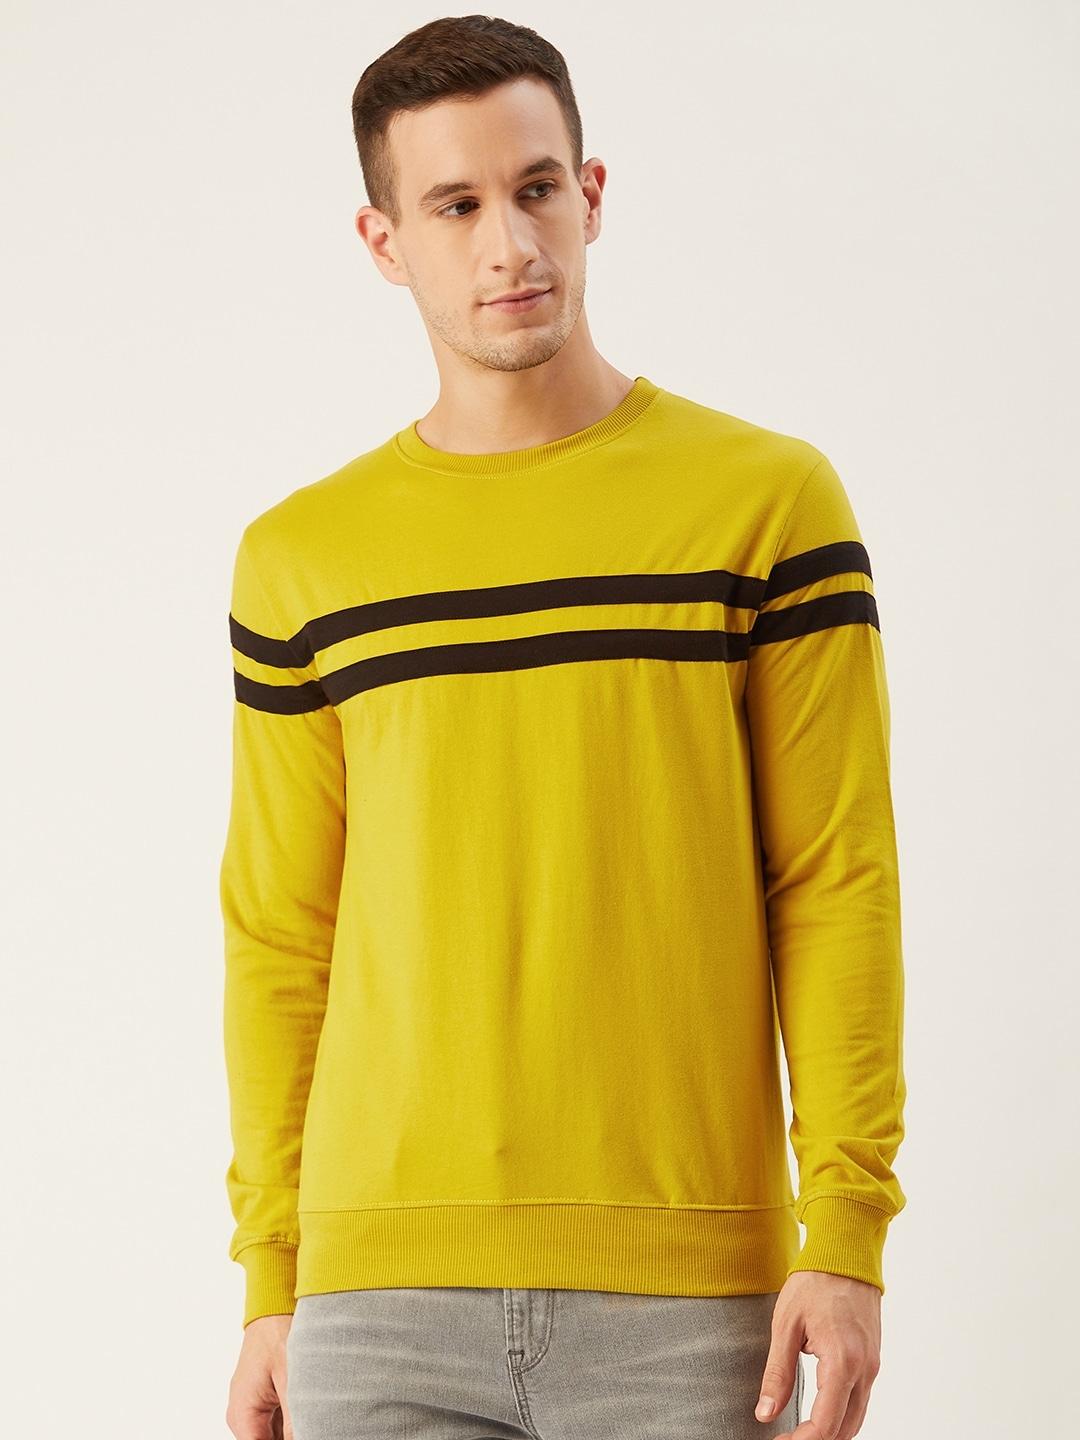 rodzen-men-yellow-&-black-striped-sweatshirt